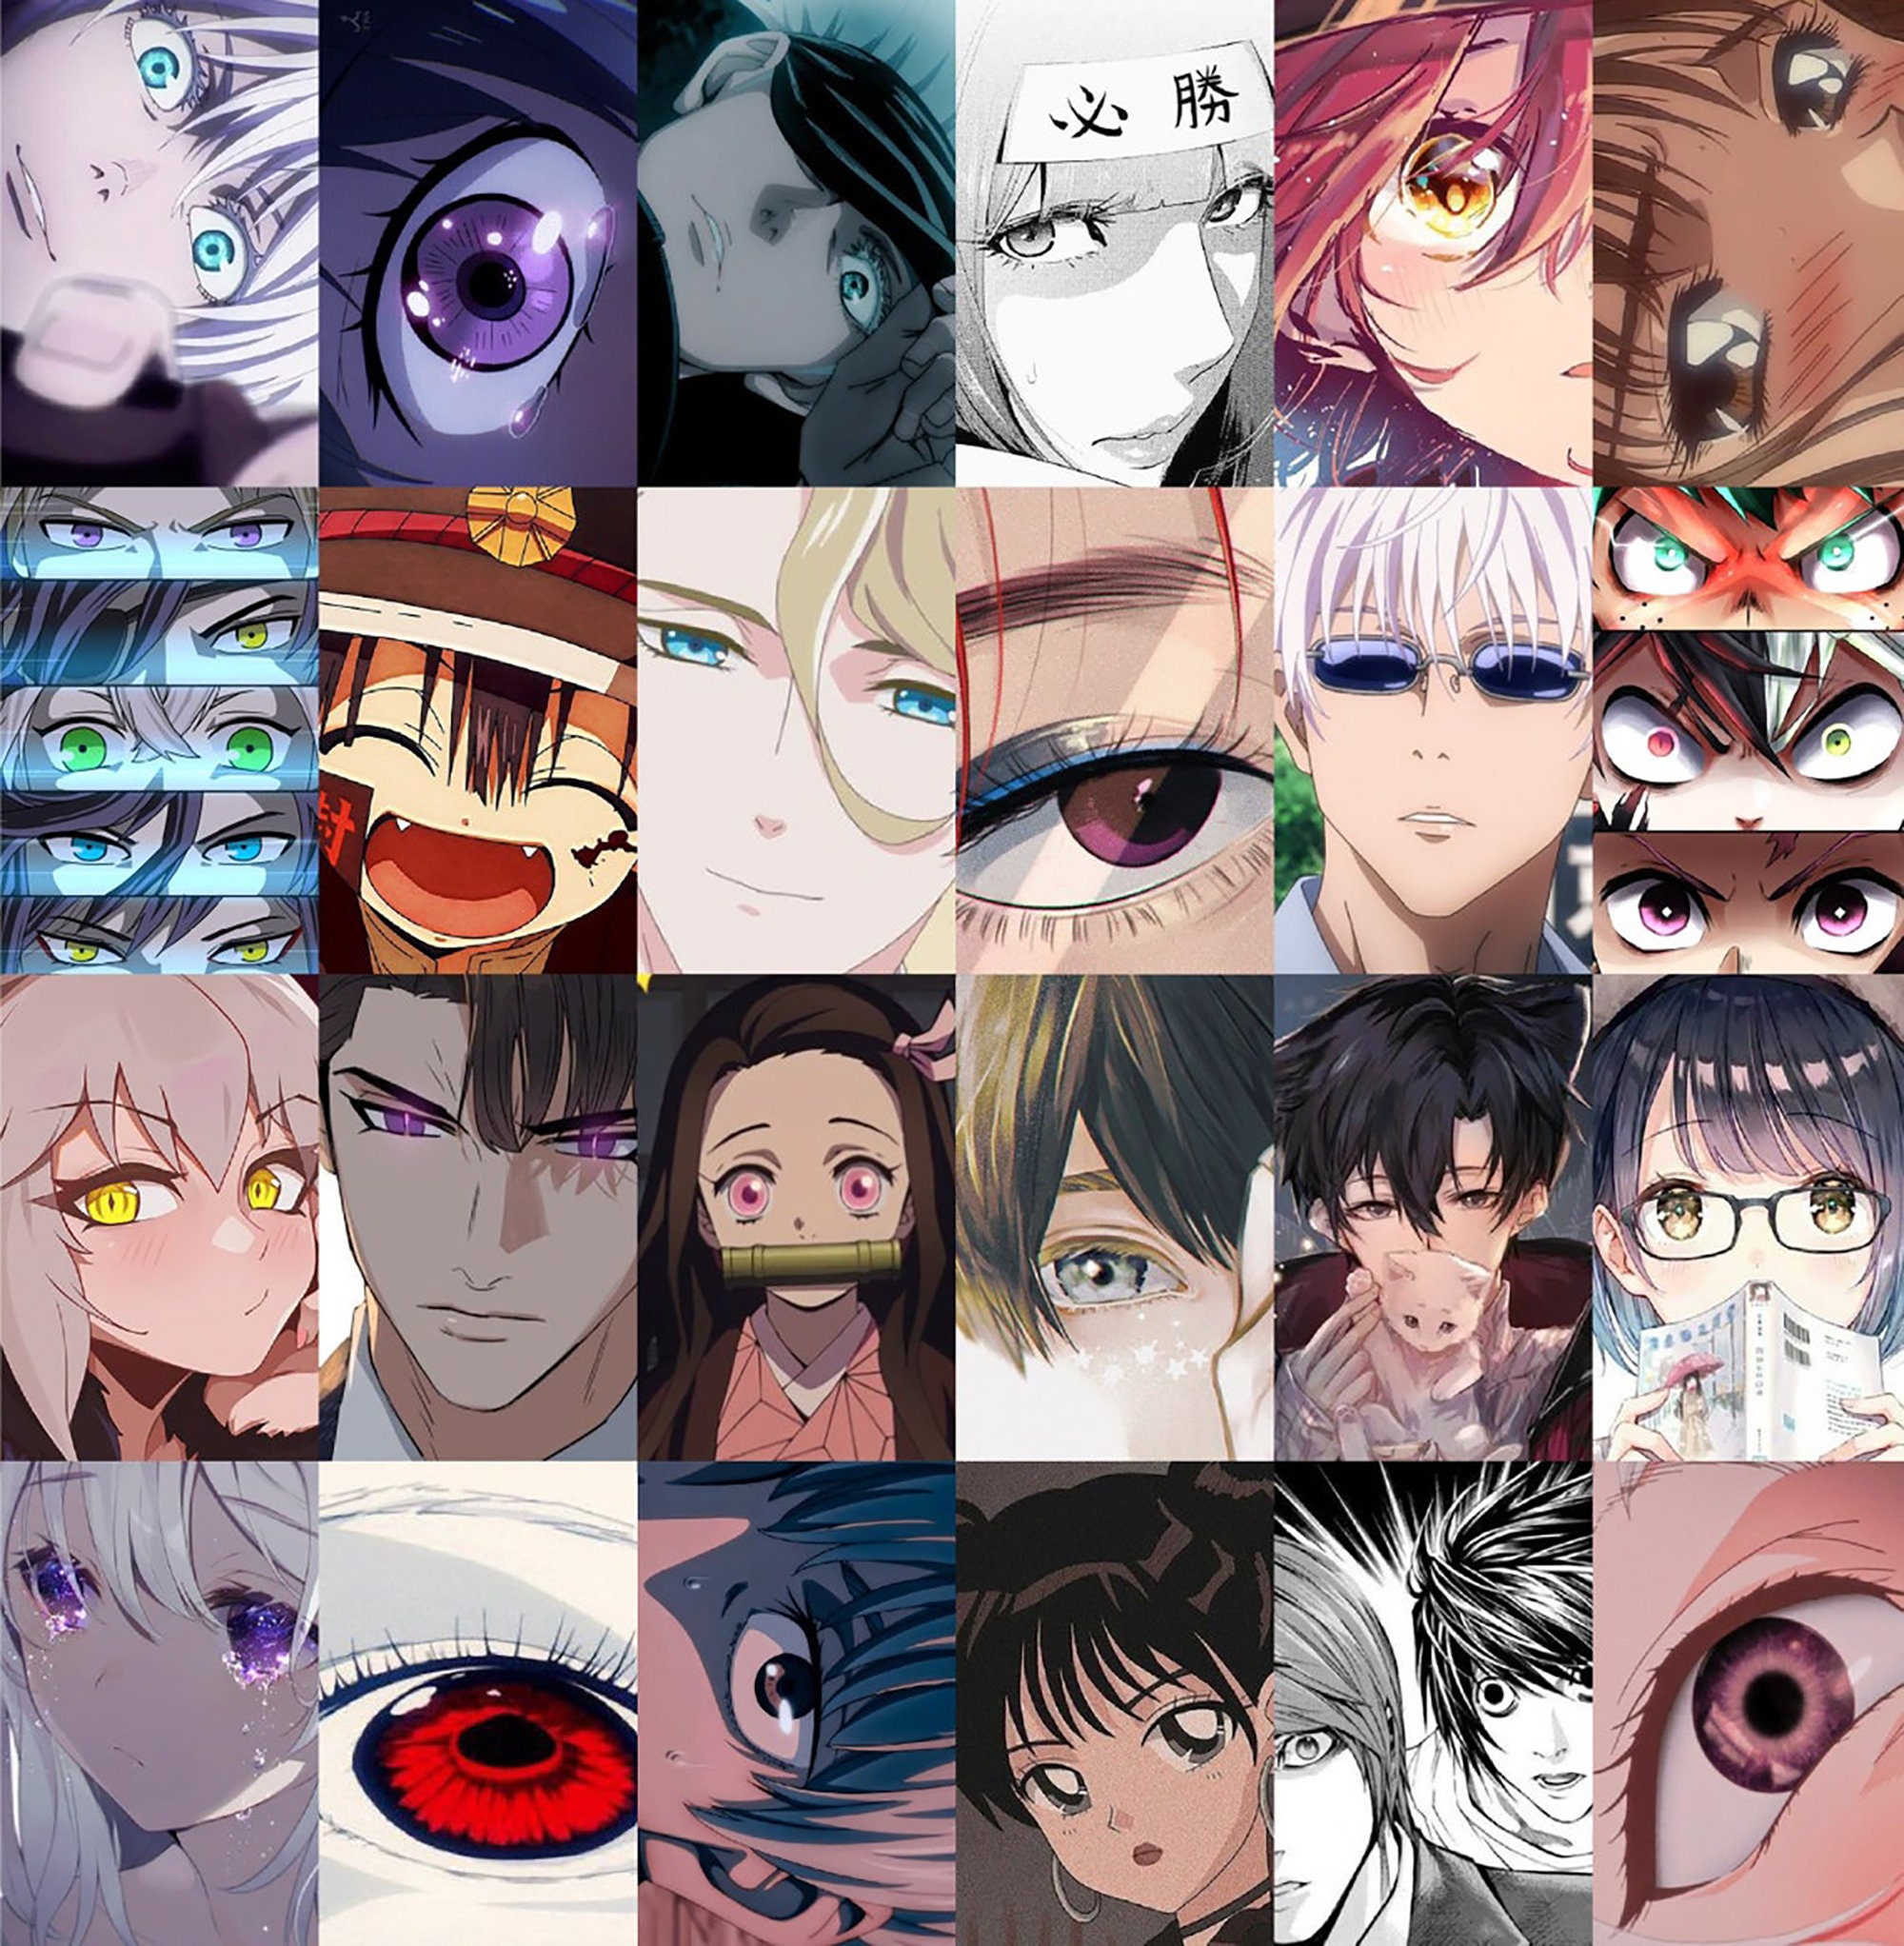 100 Glowing eyes ideas  mangá icons, anime icons, anime